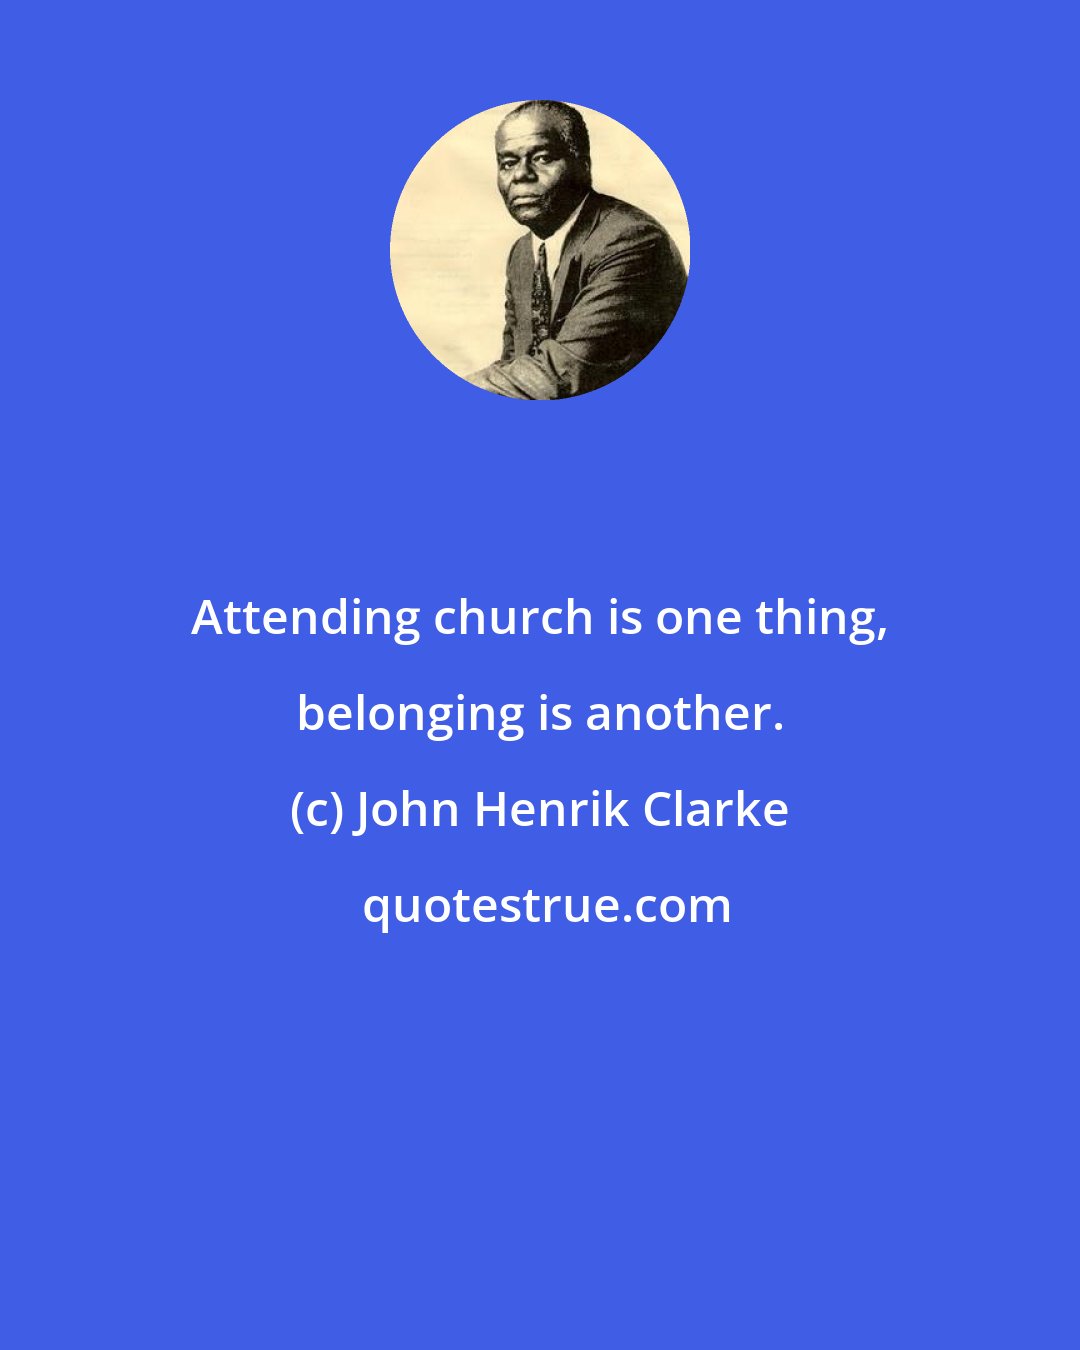 John Henrik Clarke: Attending church is one thing, belonging is another.